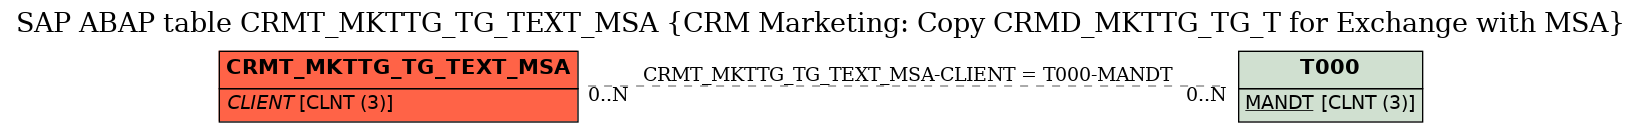 E-R Diagram for table CRMT_MKTTG_TG_TEXT_MSA (CRM Marketing: Copy CRMD_MKTTG_TG_T for Exchange with MSA)